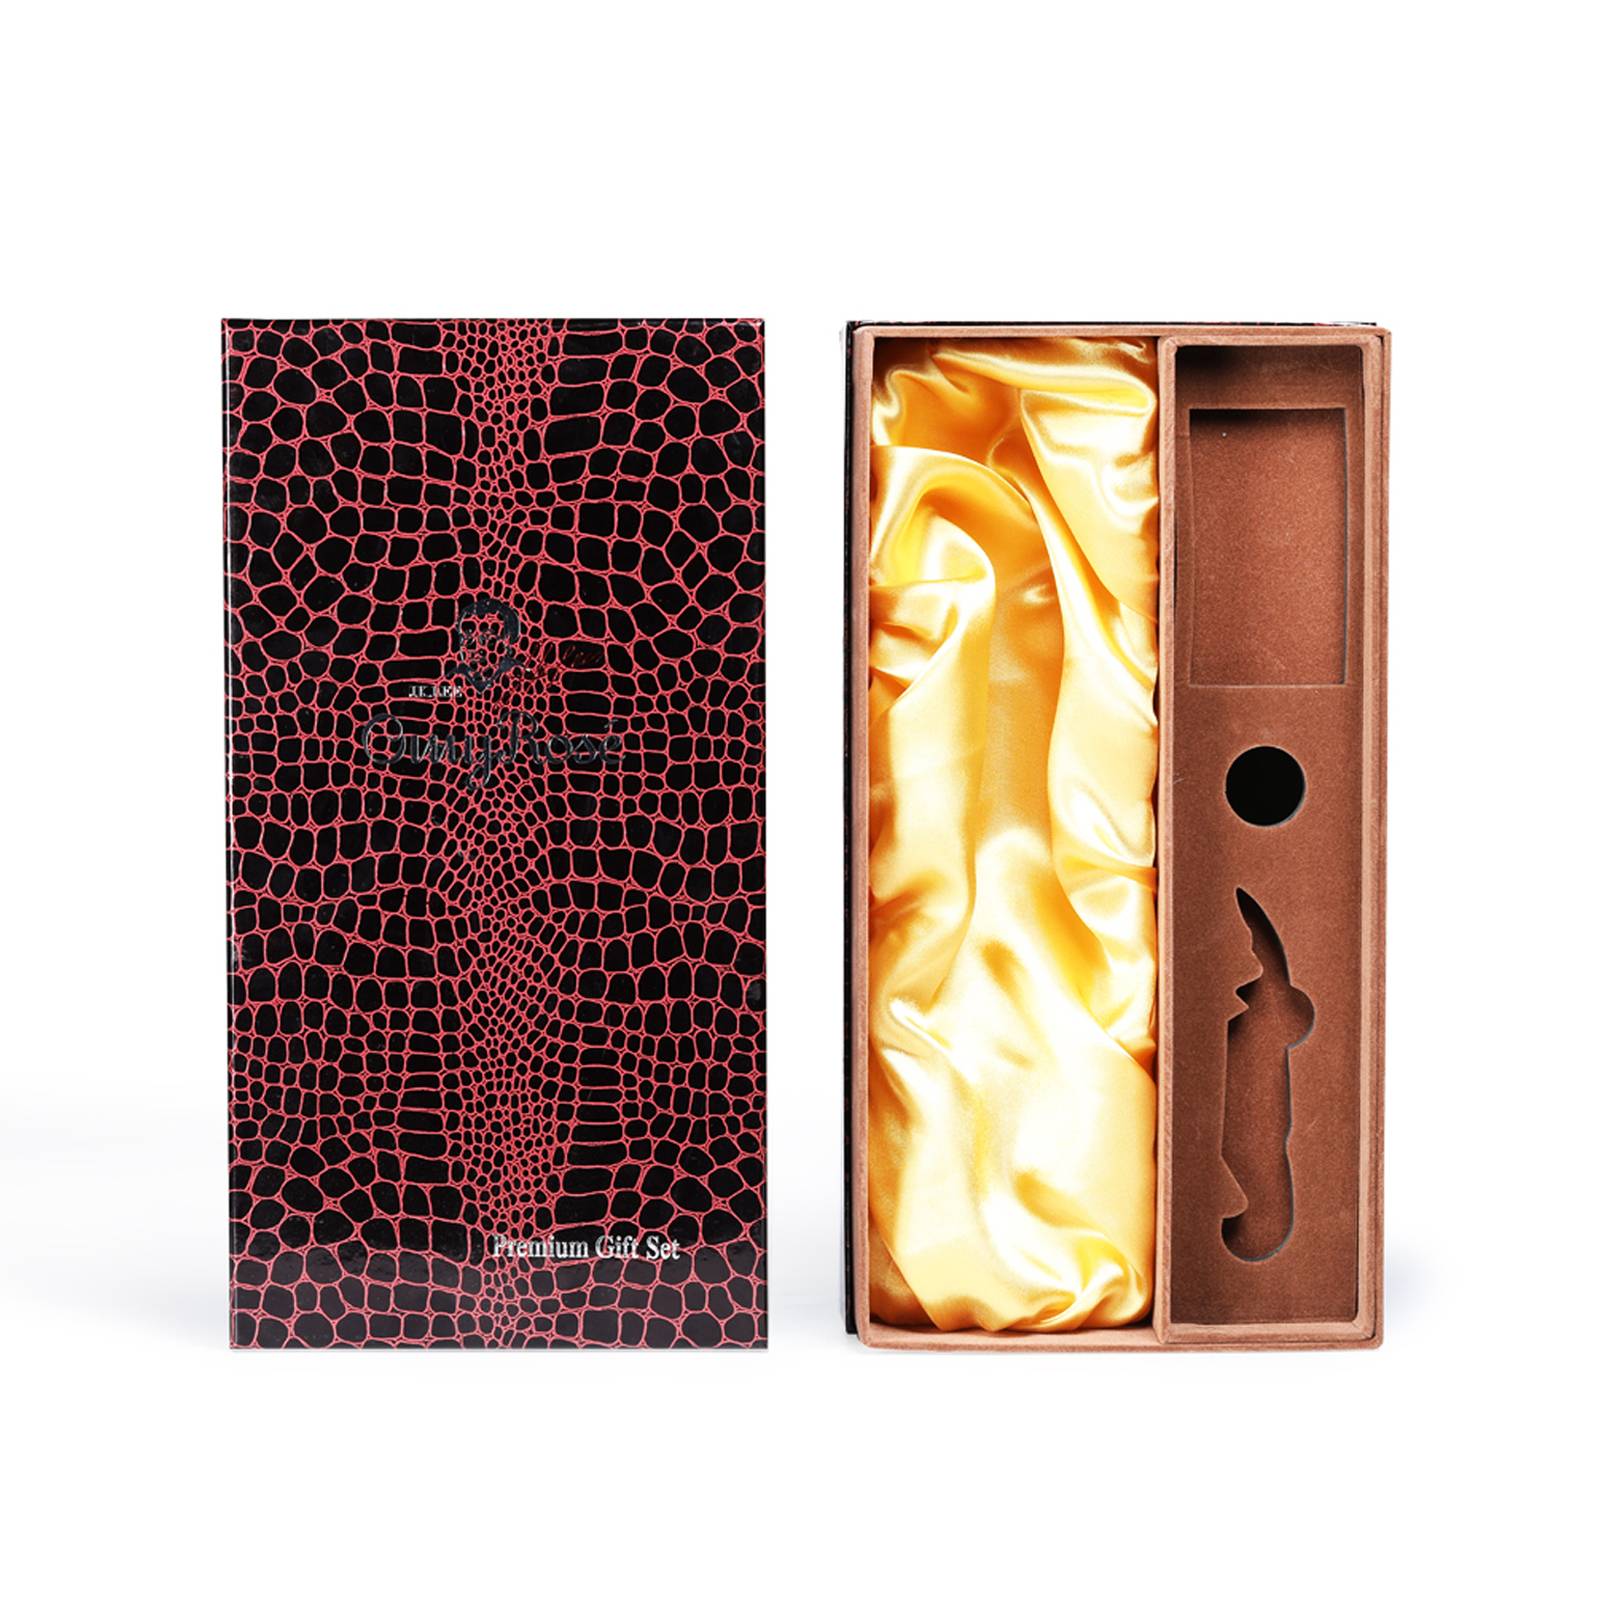 Luxury wine accessory gift set pattern customized paper wine bottle gift box